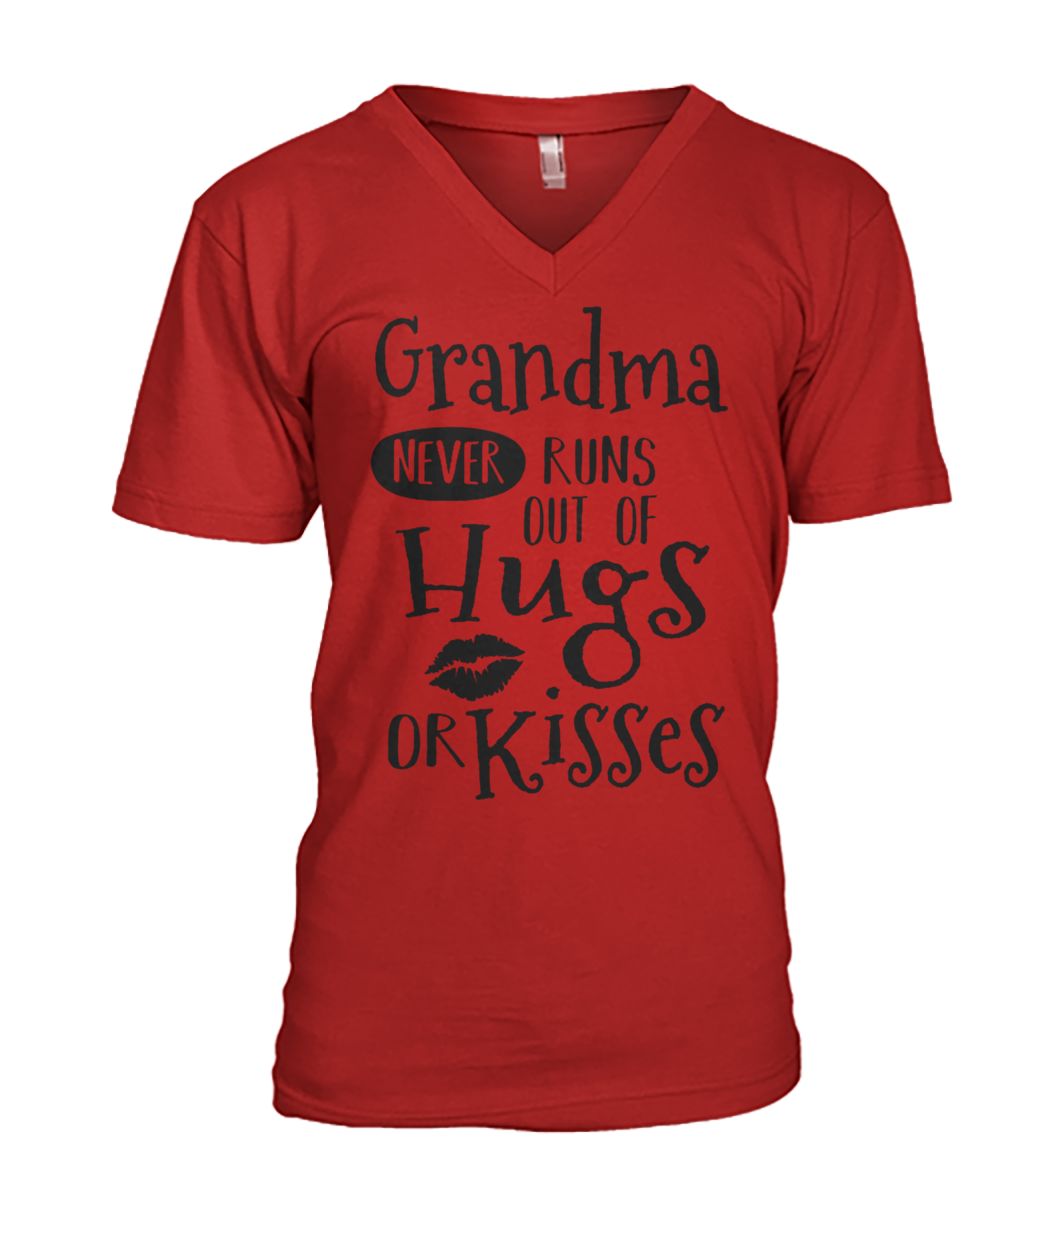 Grandma never runs out of hugs and kisses mens v-neck